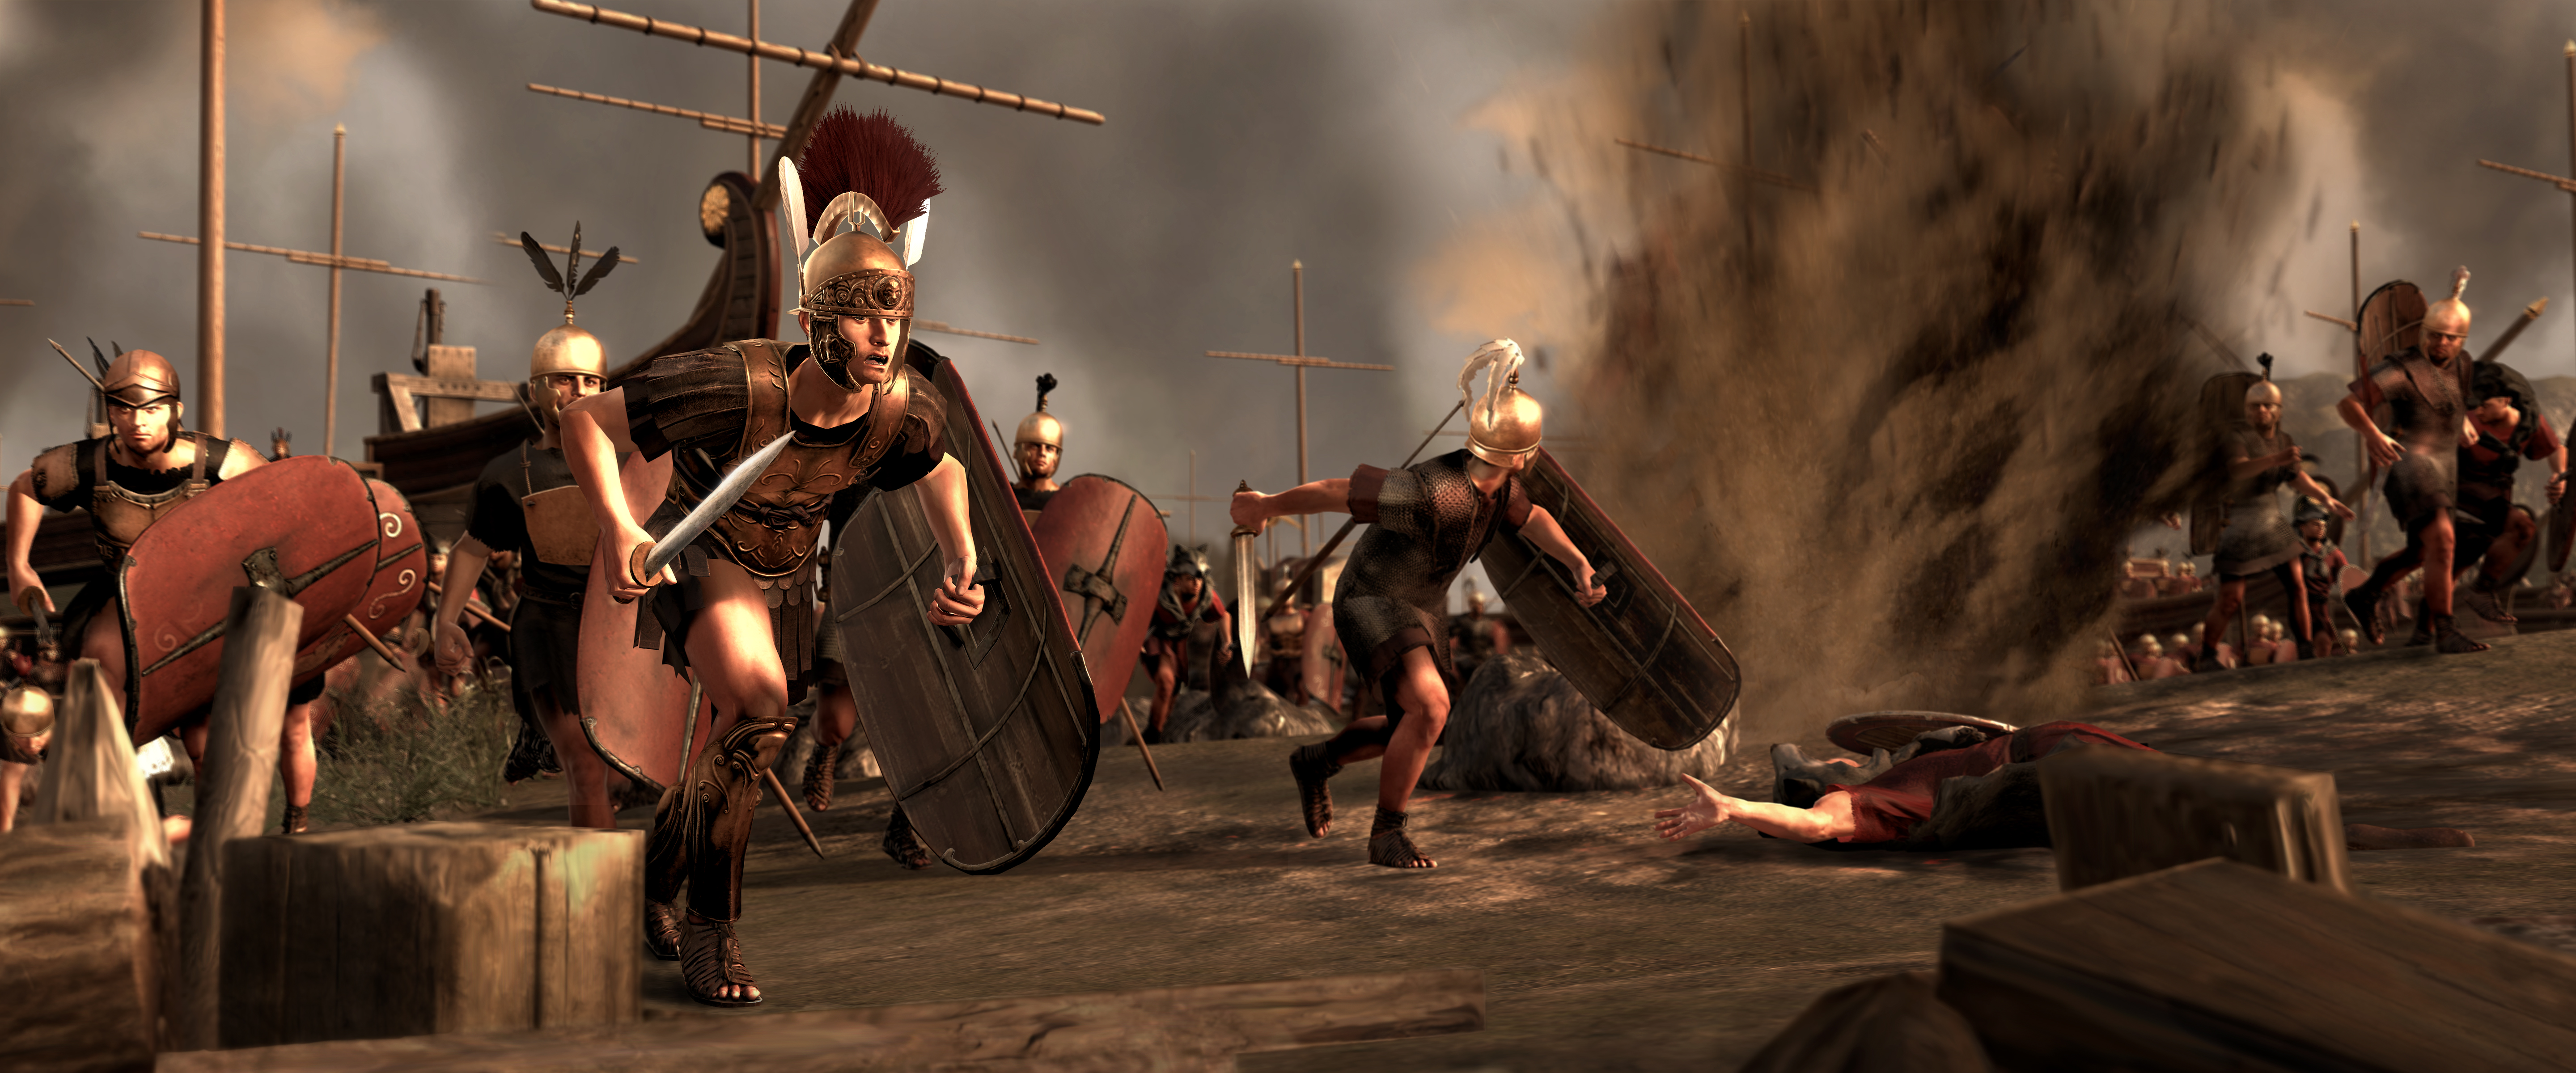 Total War: Rome II 4k Ultra HD Wallpaper and Background | 5760x2400